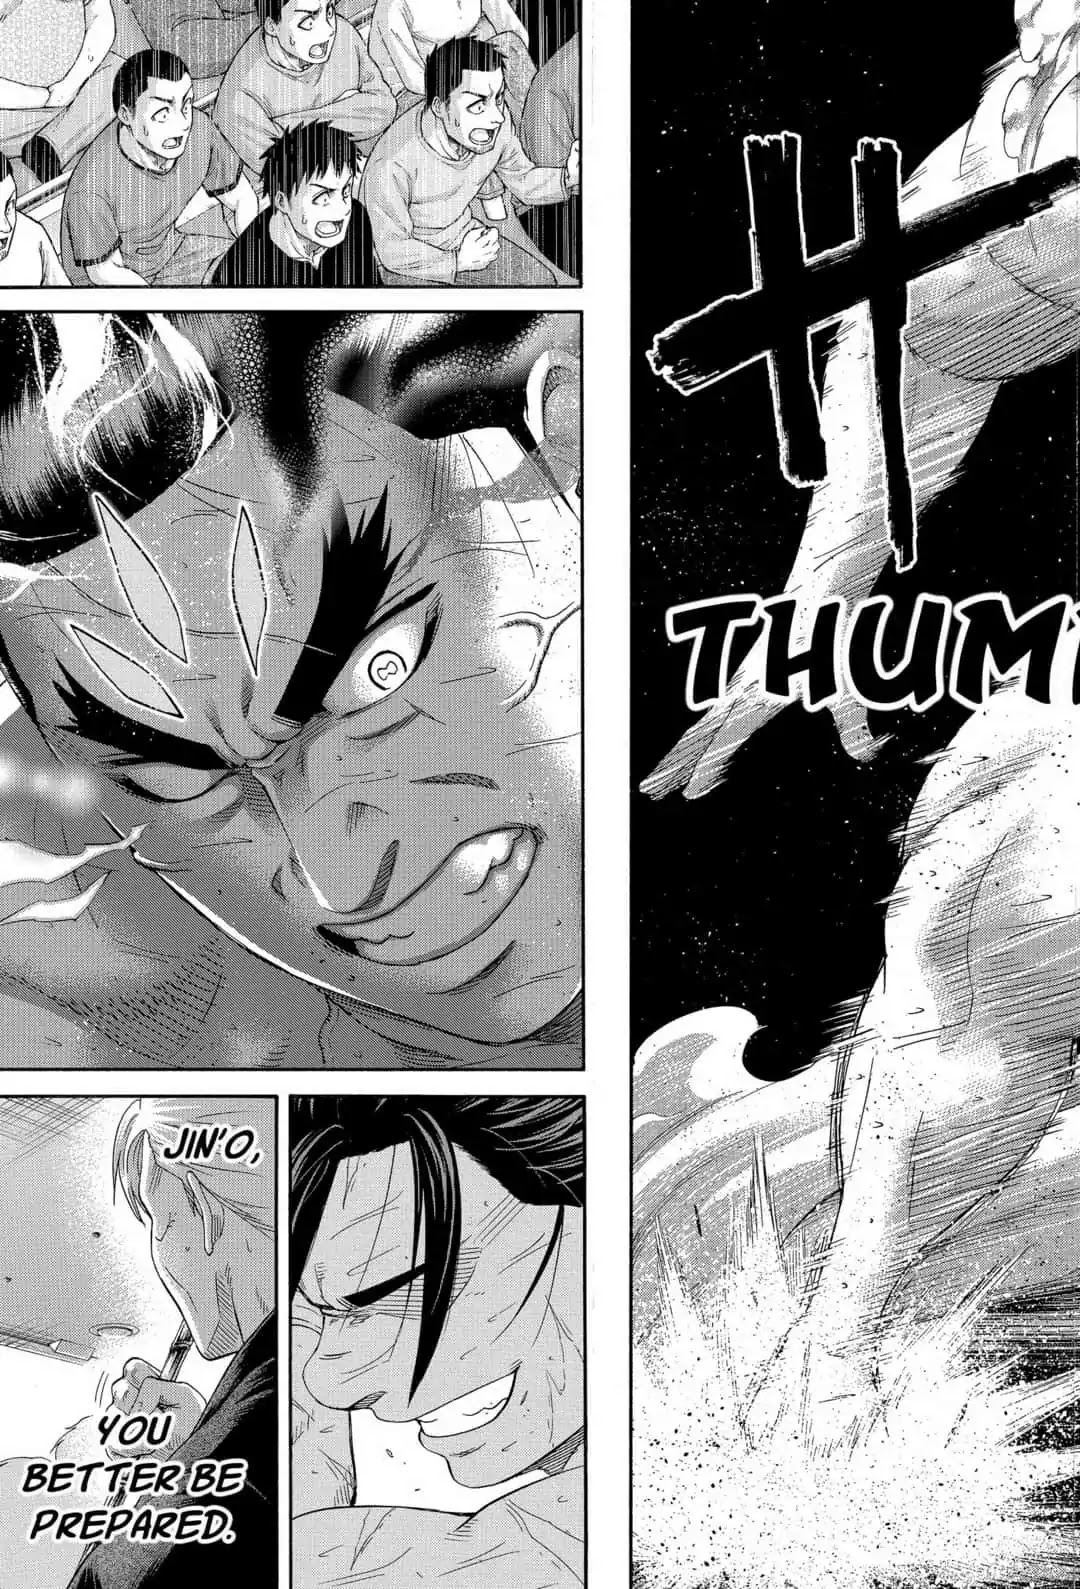 Hinomaru Zumou Chapter 250: Sumo and Hinomaru Ushio [END]